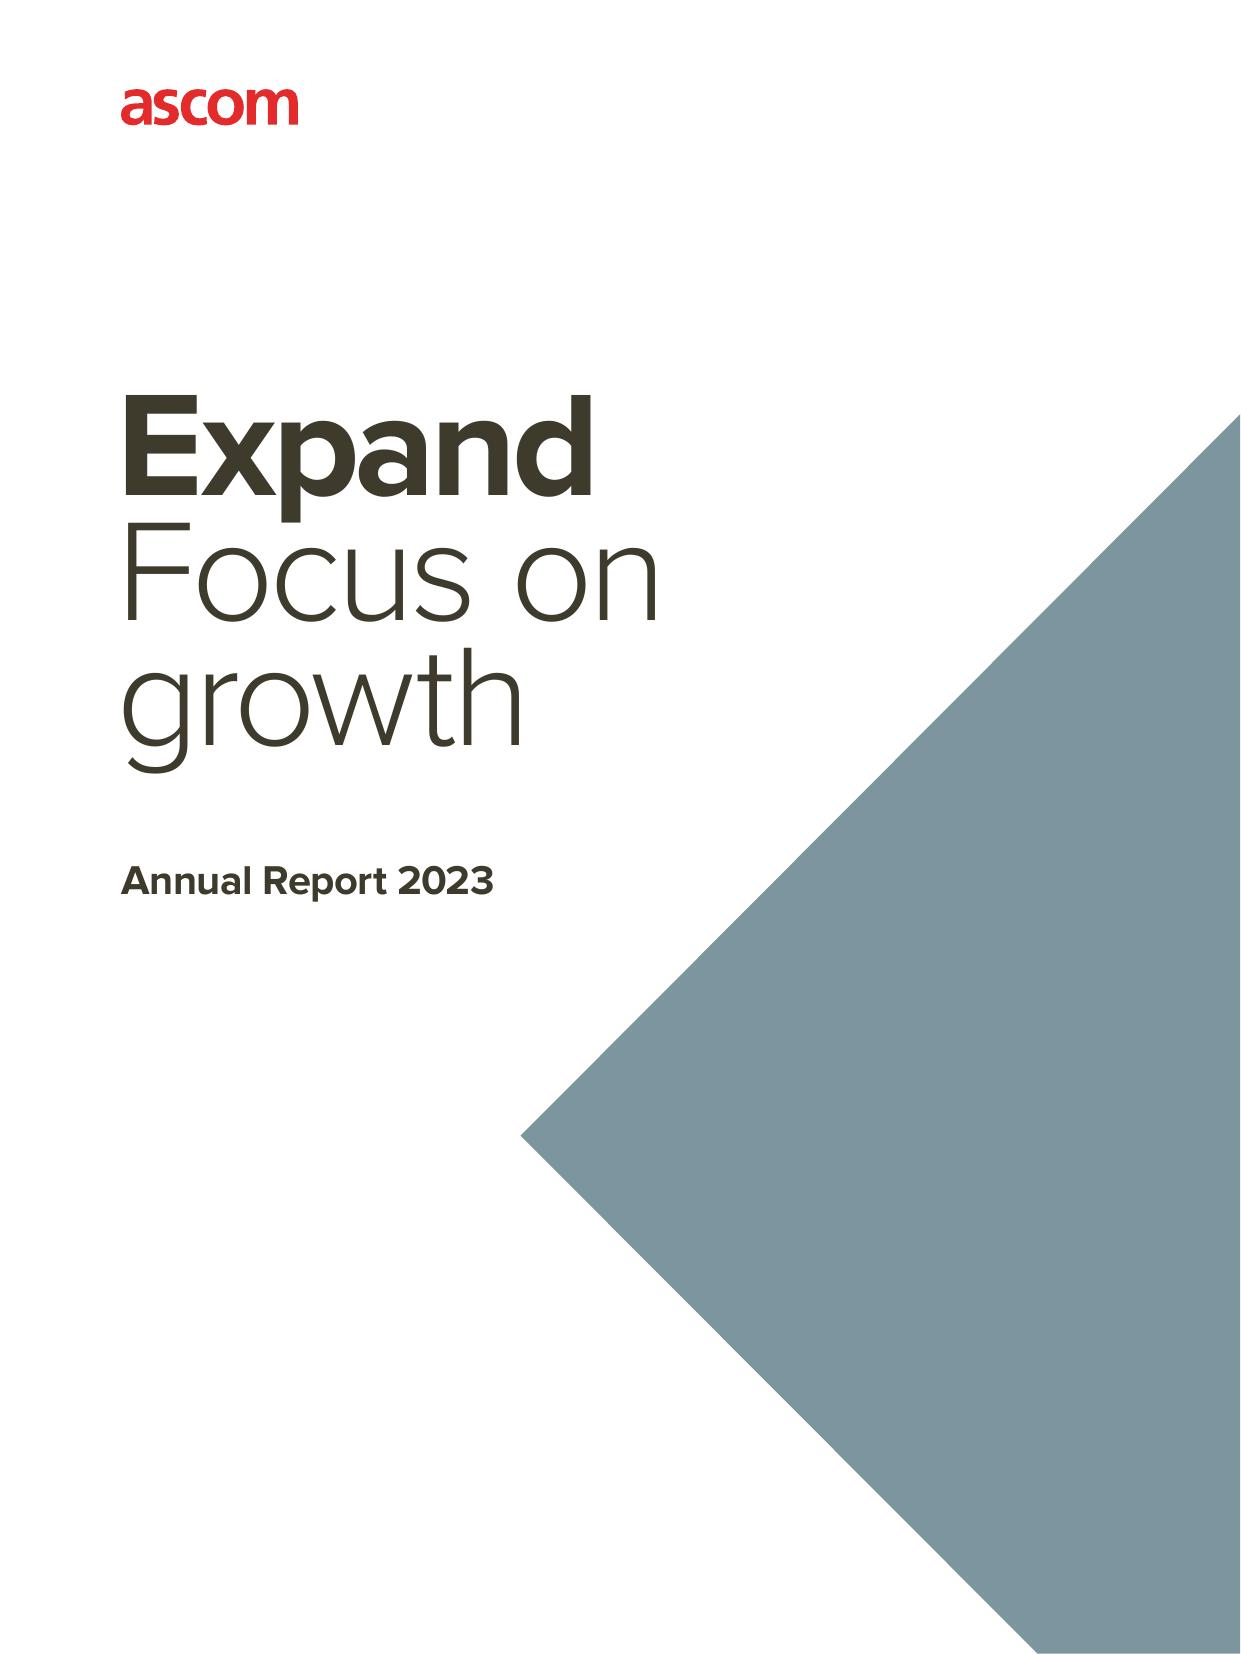 ASCOM 2023 Annual Report